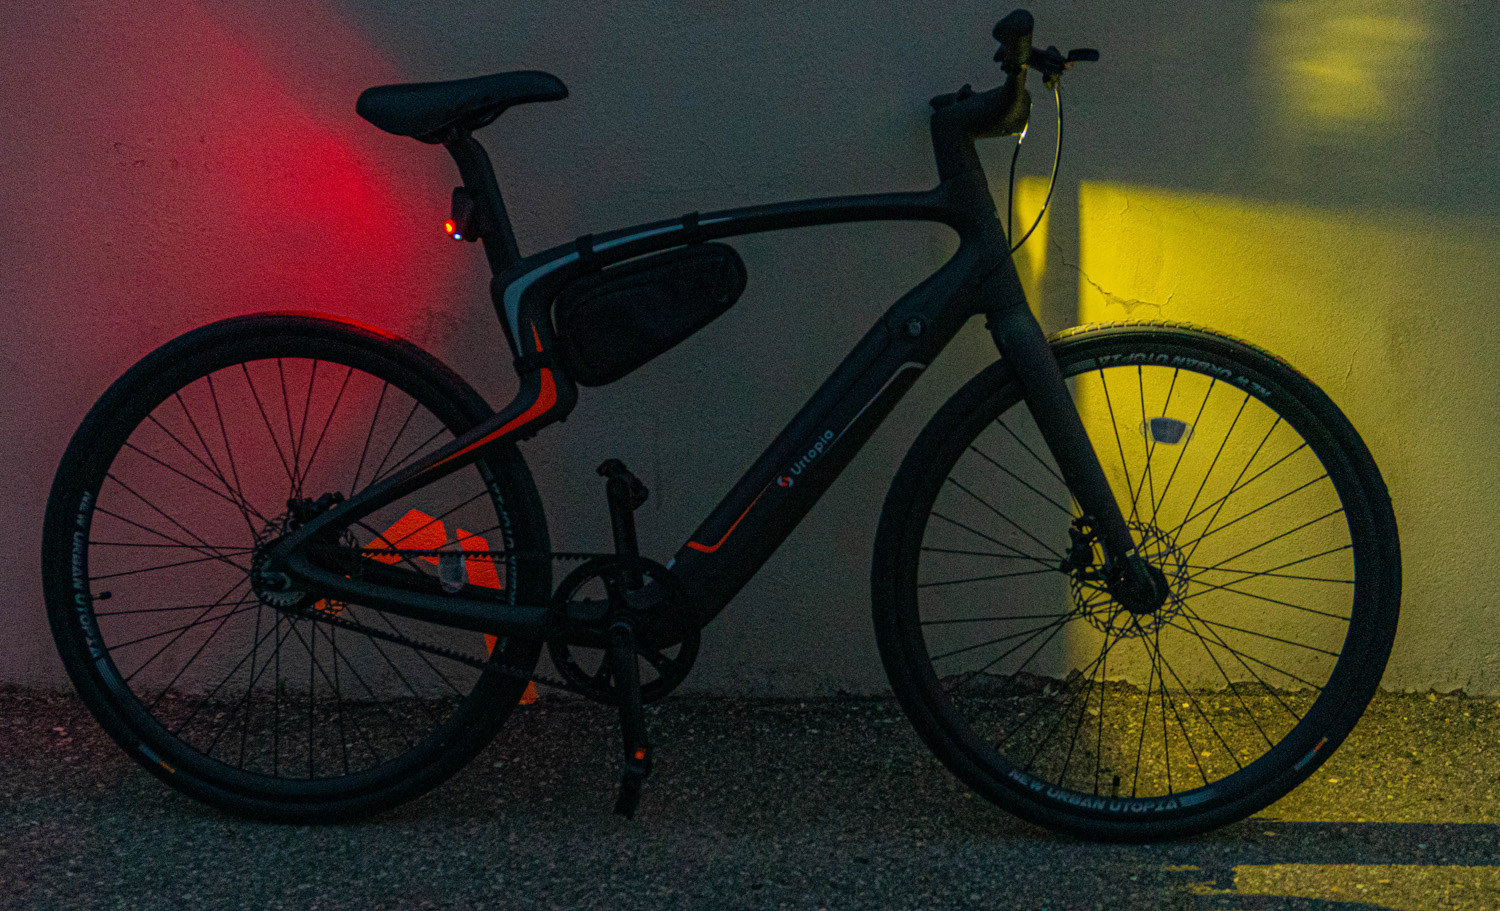 New Urban Urtopa Carbon E-Bike Lighting on display at night